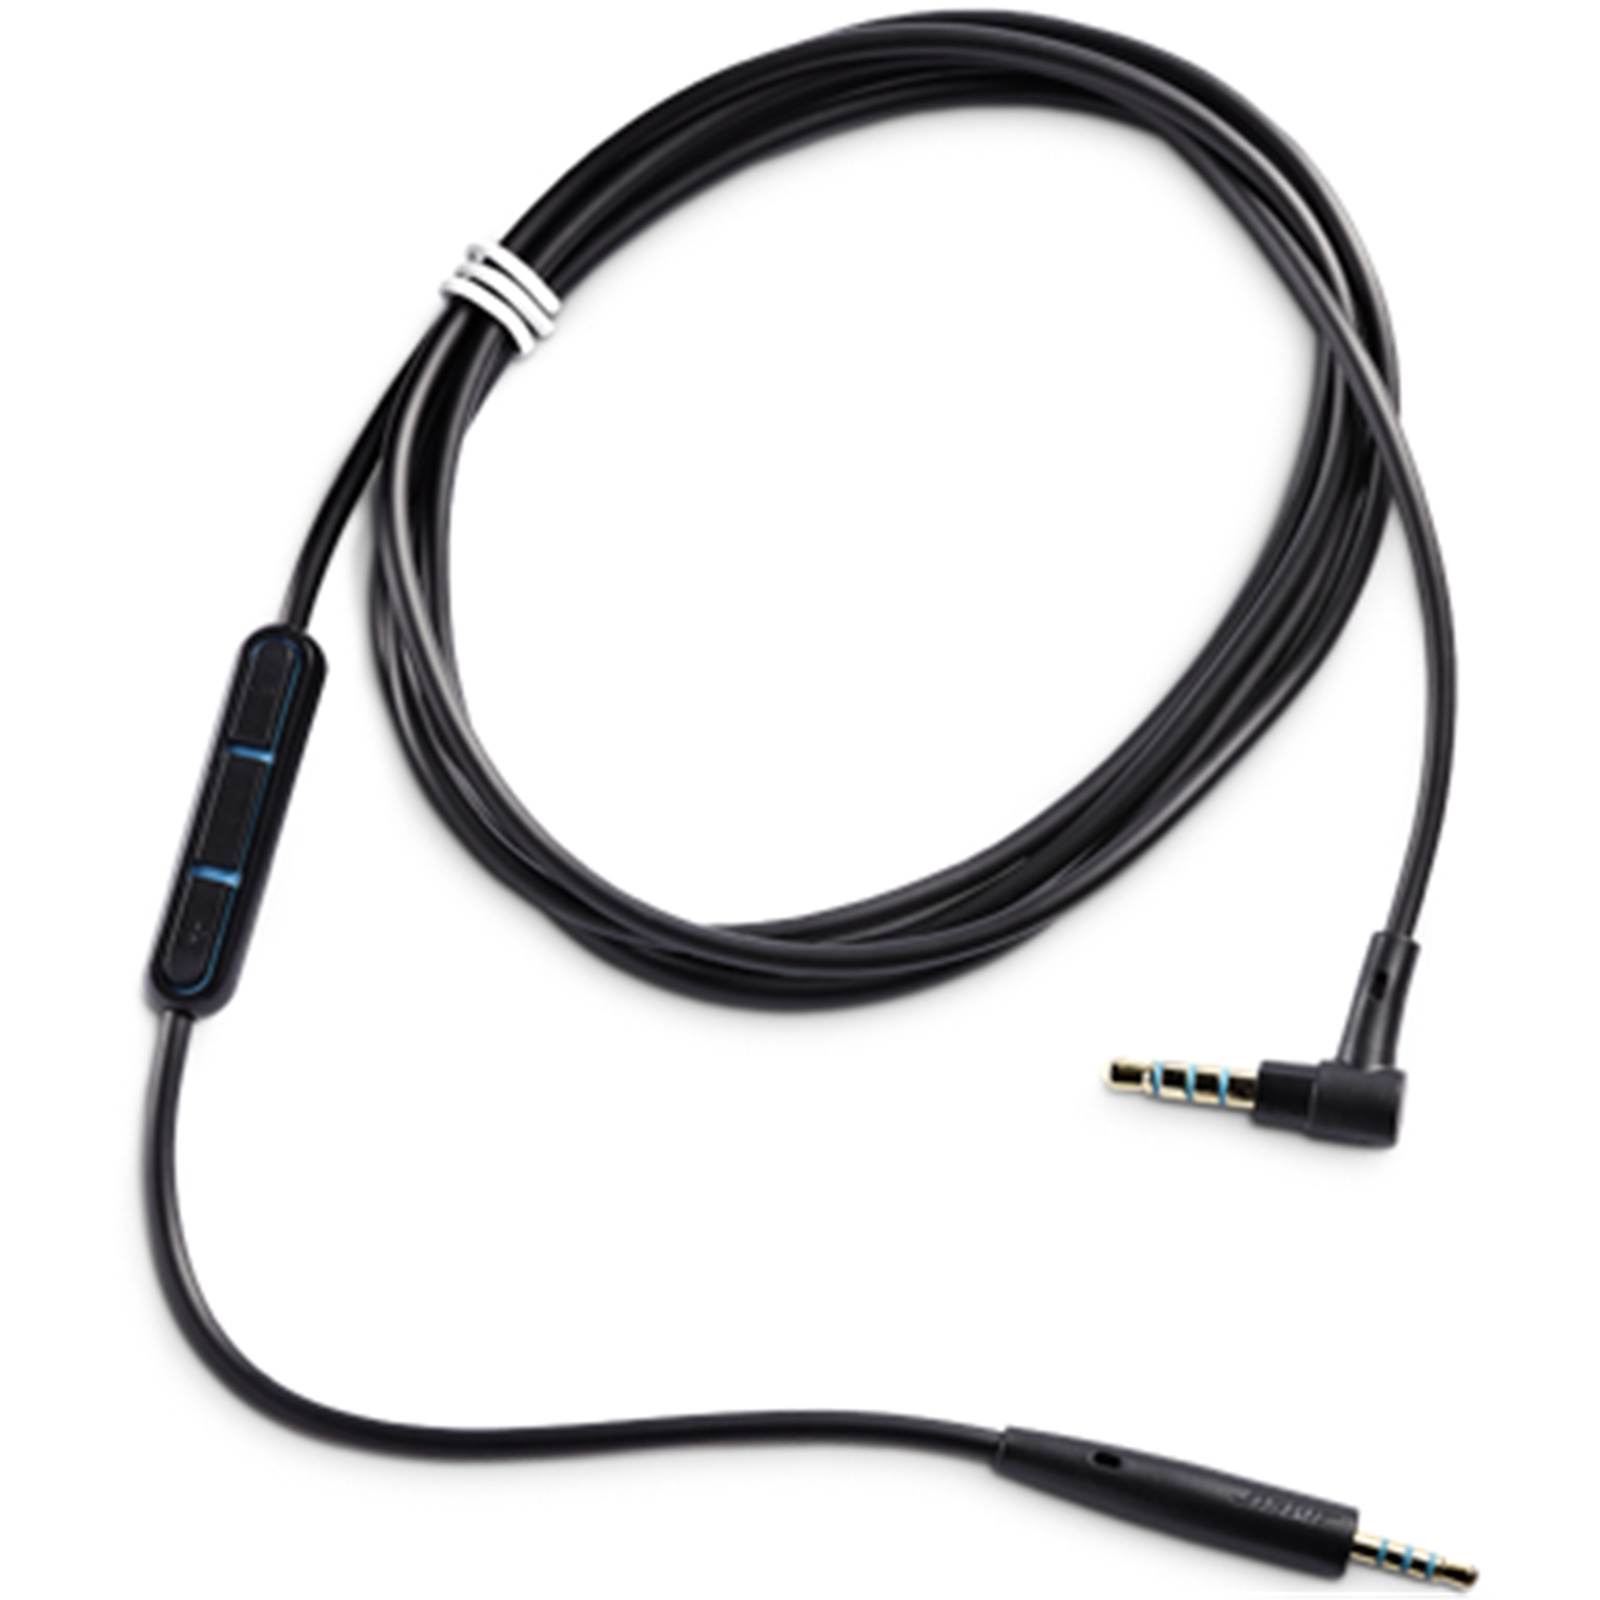 fejl gaffel Underlegen Buy the Bose QuietComfort 25 Headphones in-line mic/remote cable - Black -  for... ( 720875-0110 ) online - PBTech.com/pacific